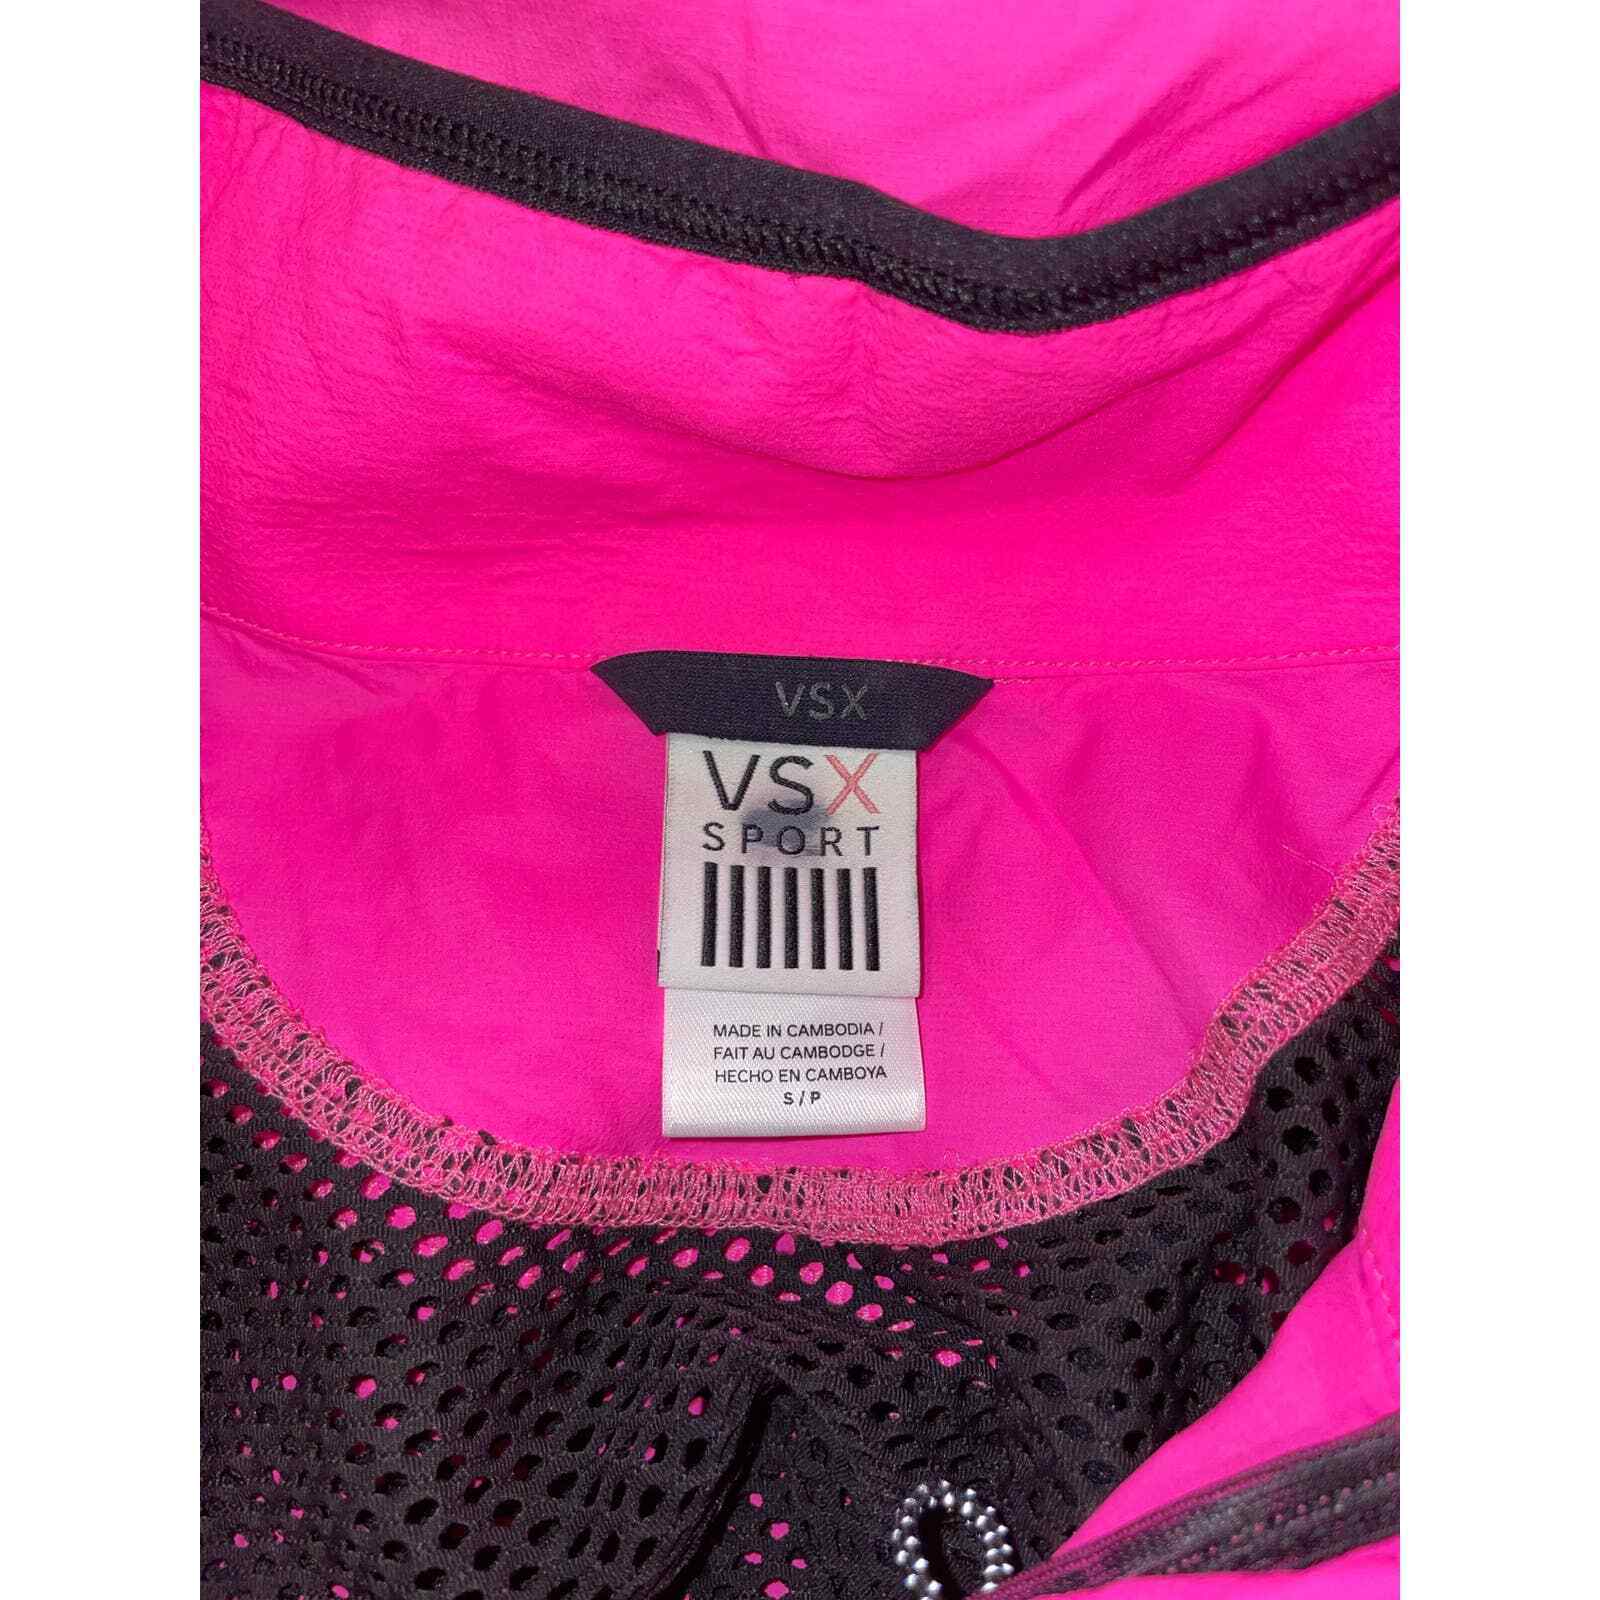 VSX Sport Victoria's Secret Neon Pink Jacket      Size: S